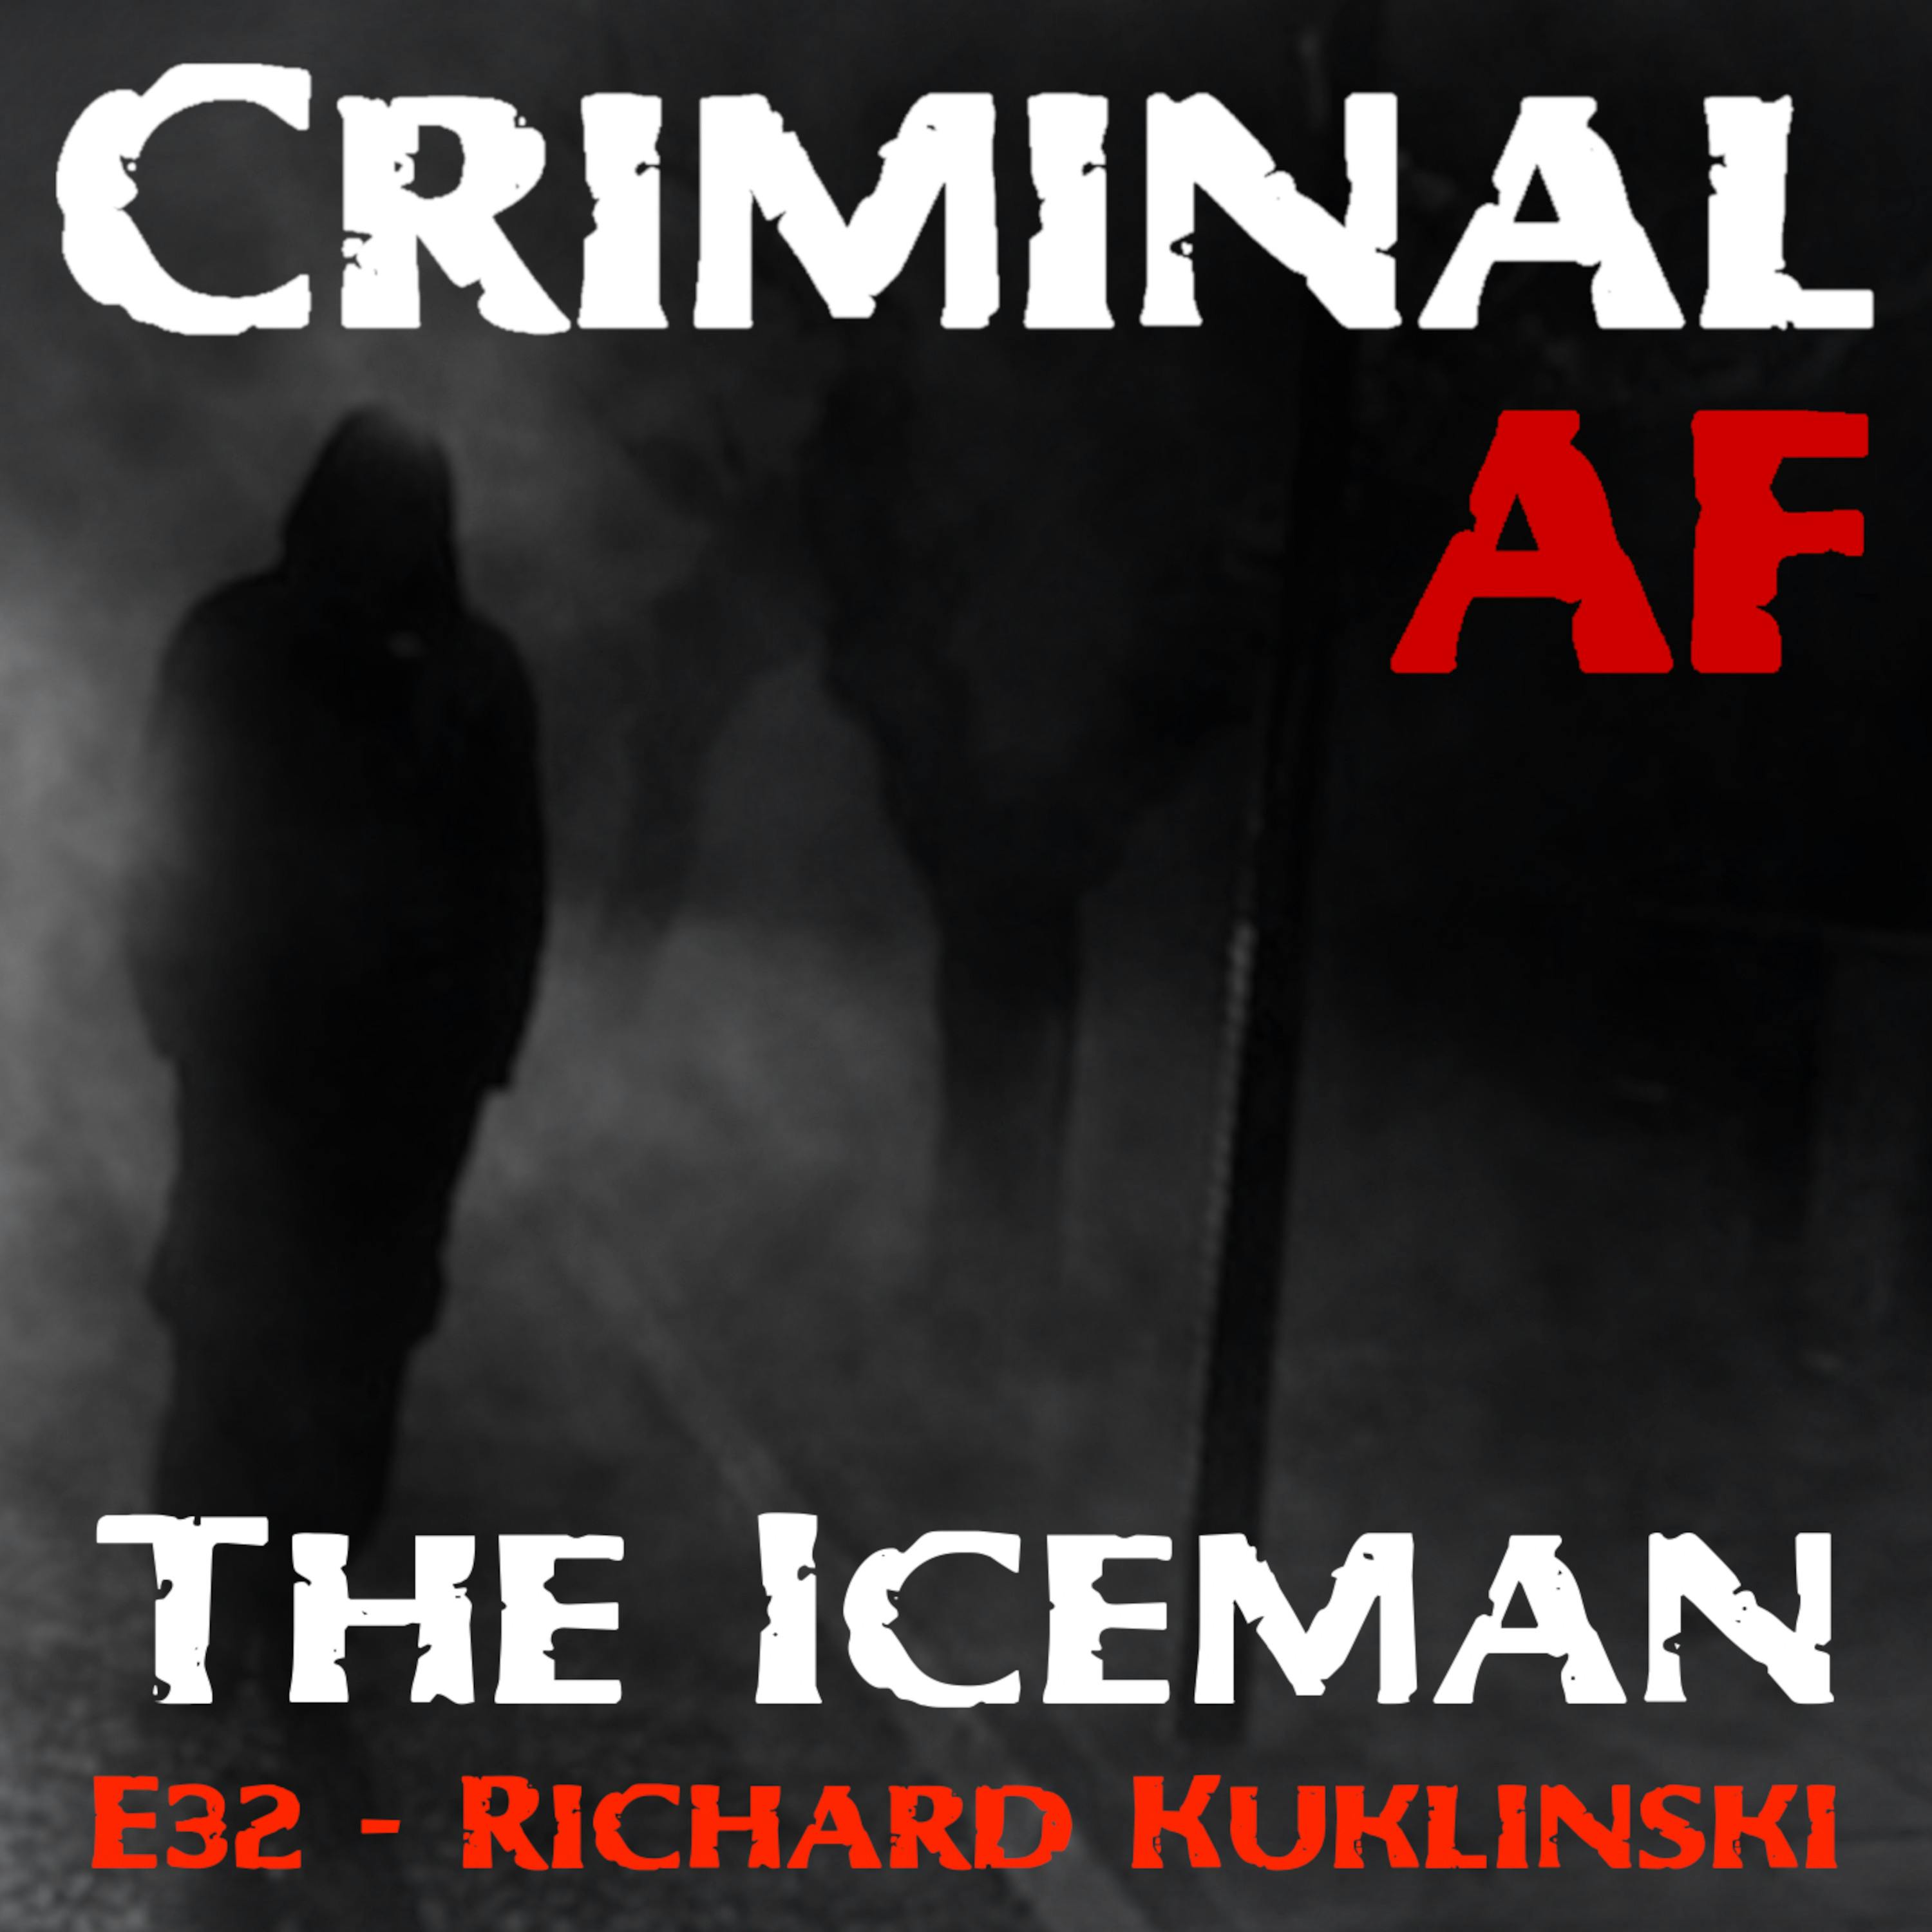 The Iceman - Richard Kuklinski E32